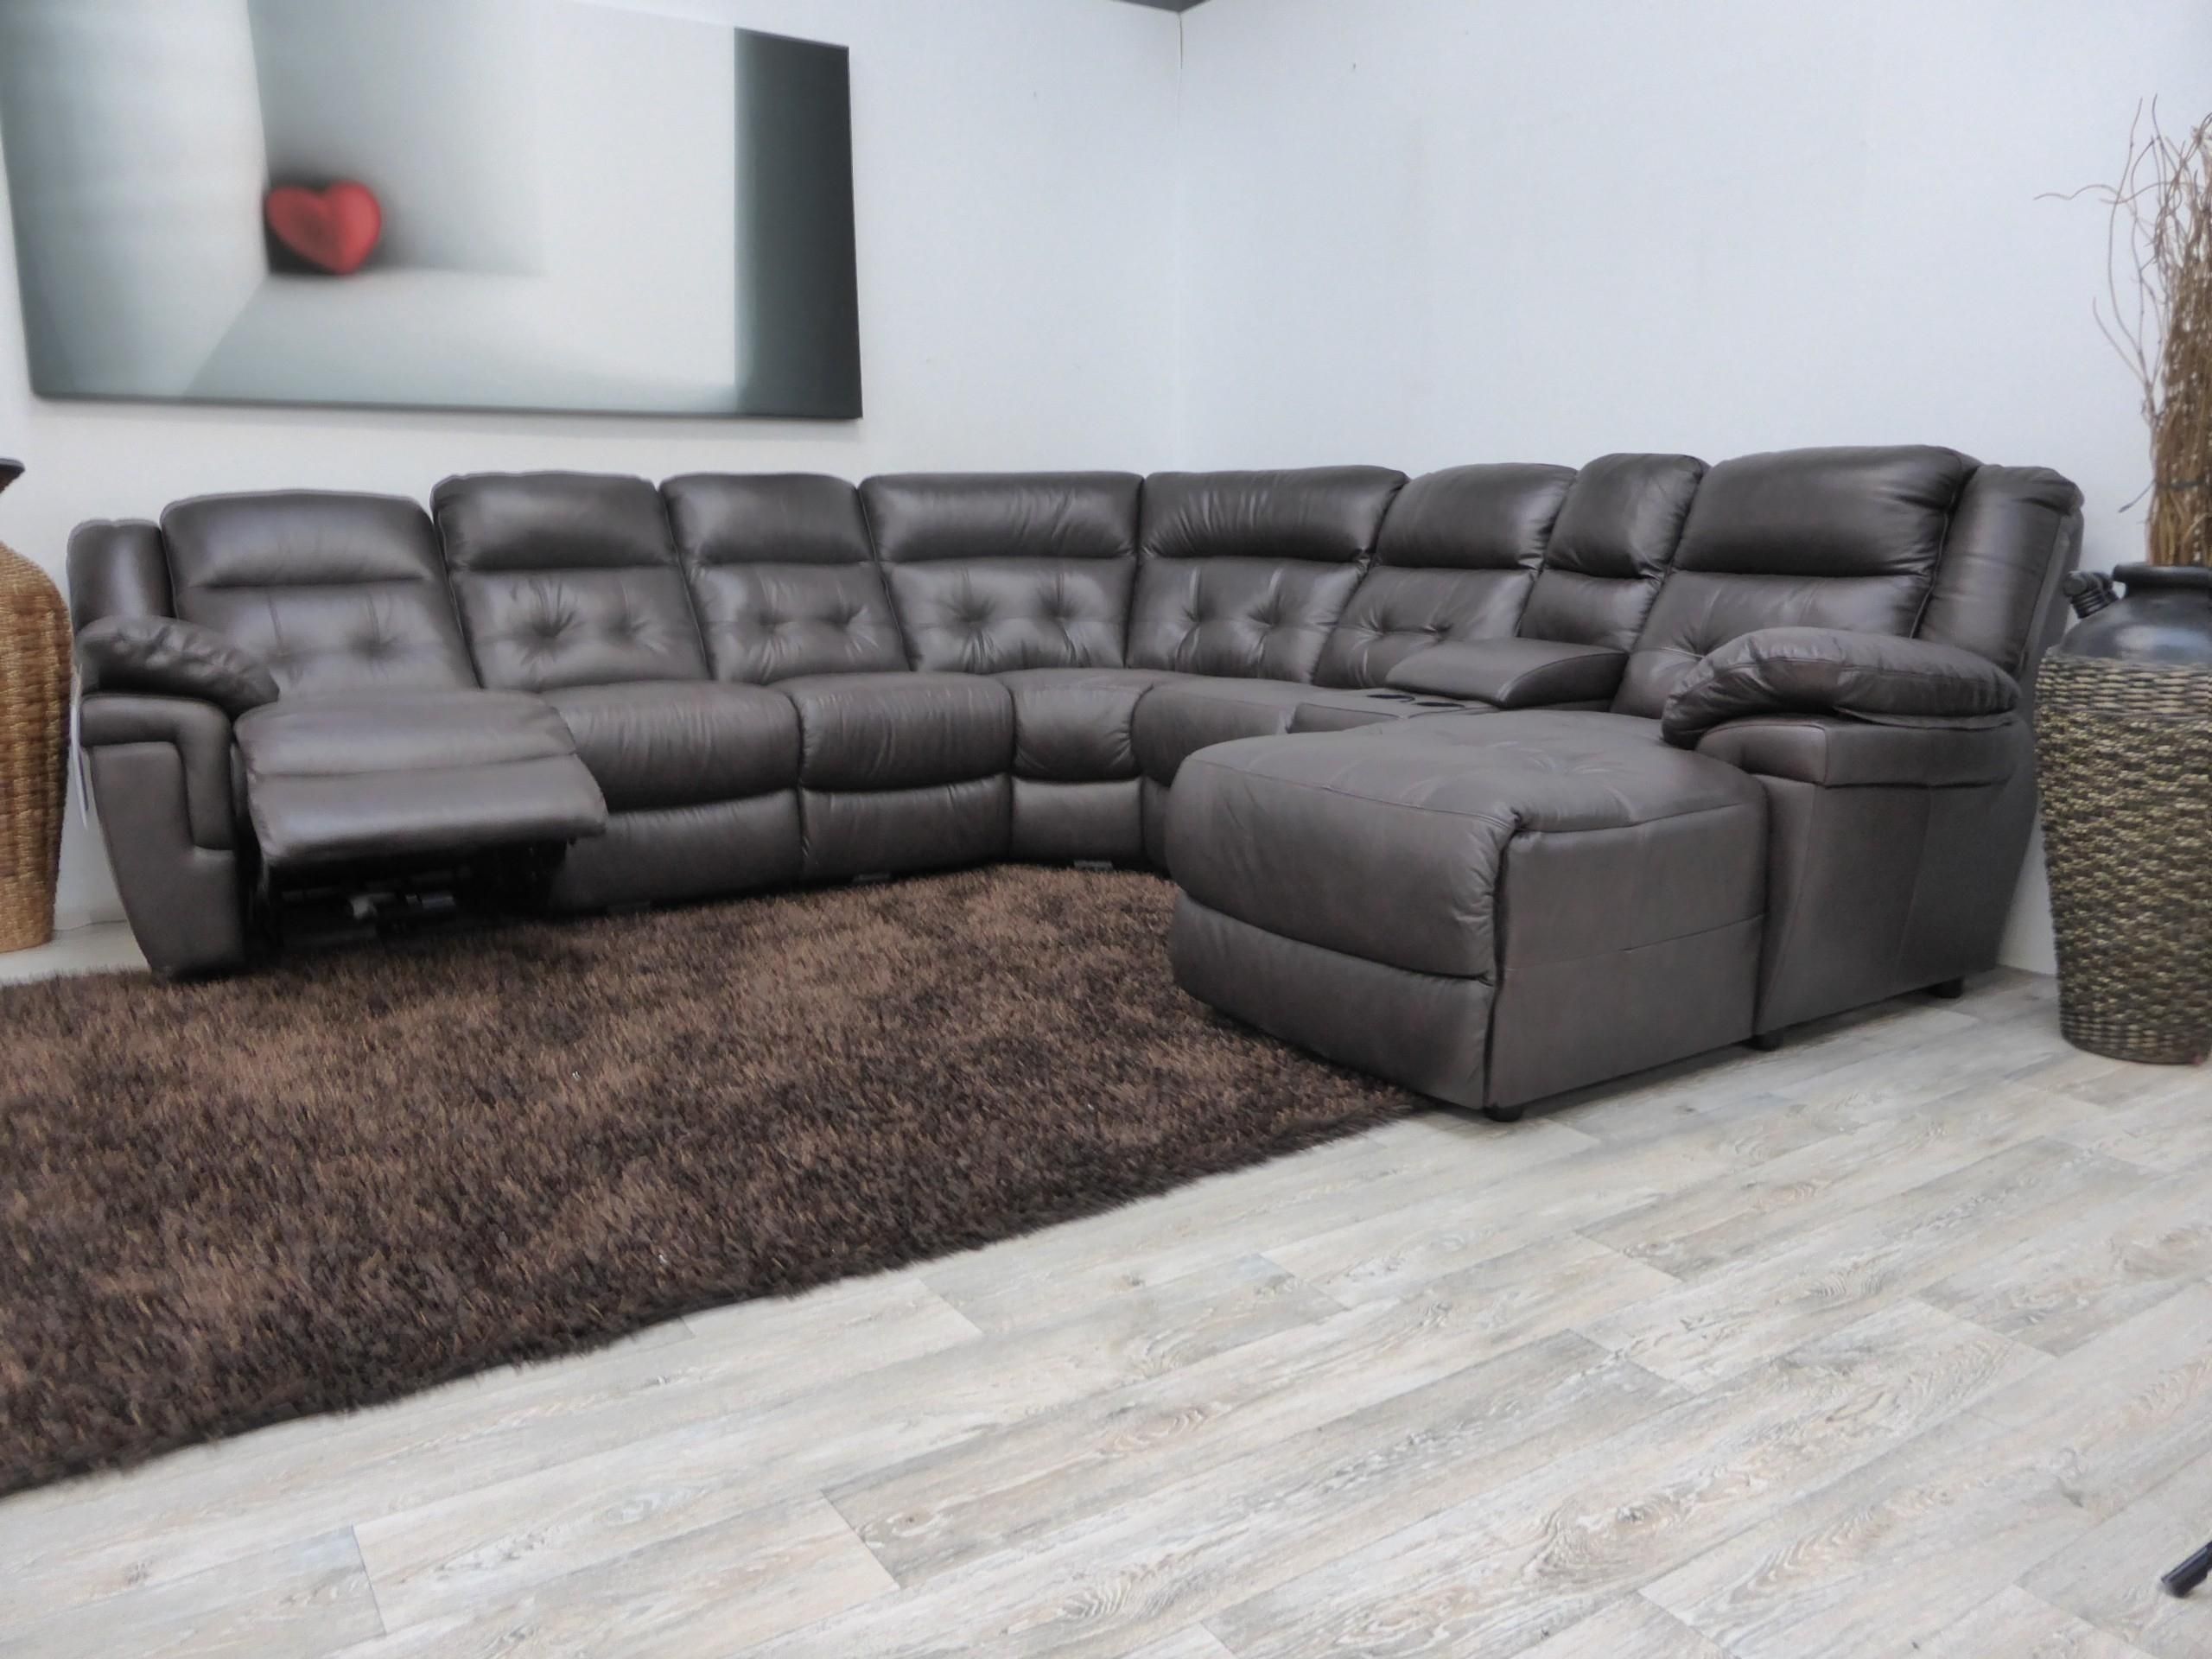 Craigslist Leather Sofa – Leather Sectional Sofa Pertaining To Craigslist Leather Sofa (View 3 of 20)